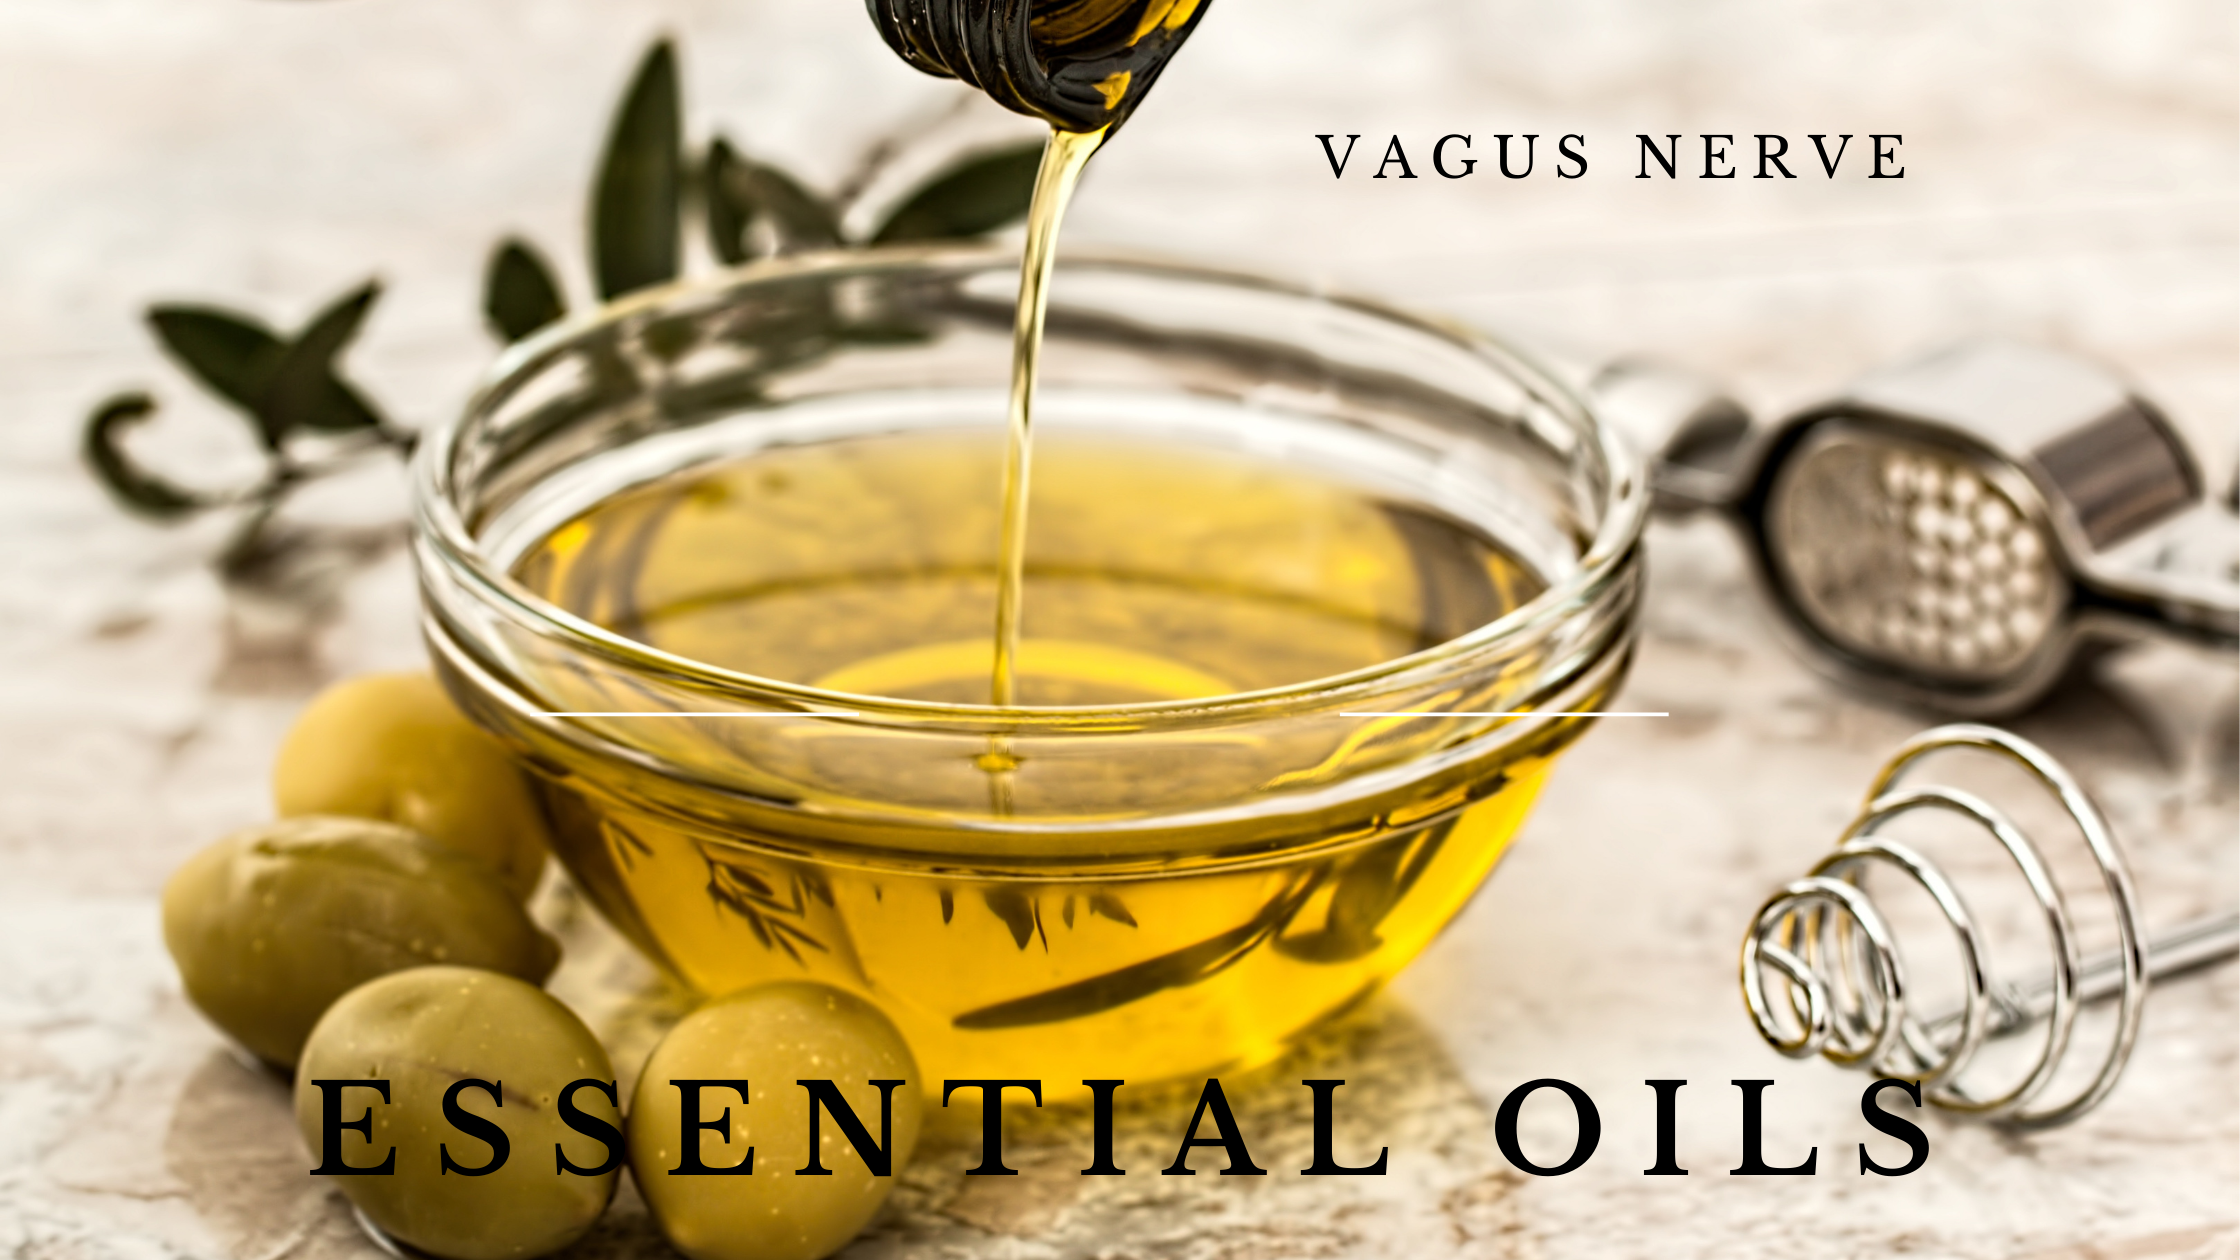 Essential oils for vagus nerve